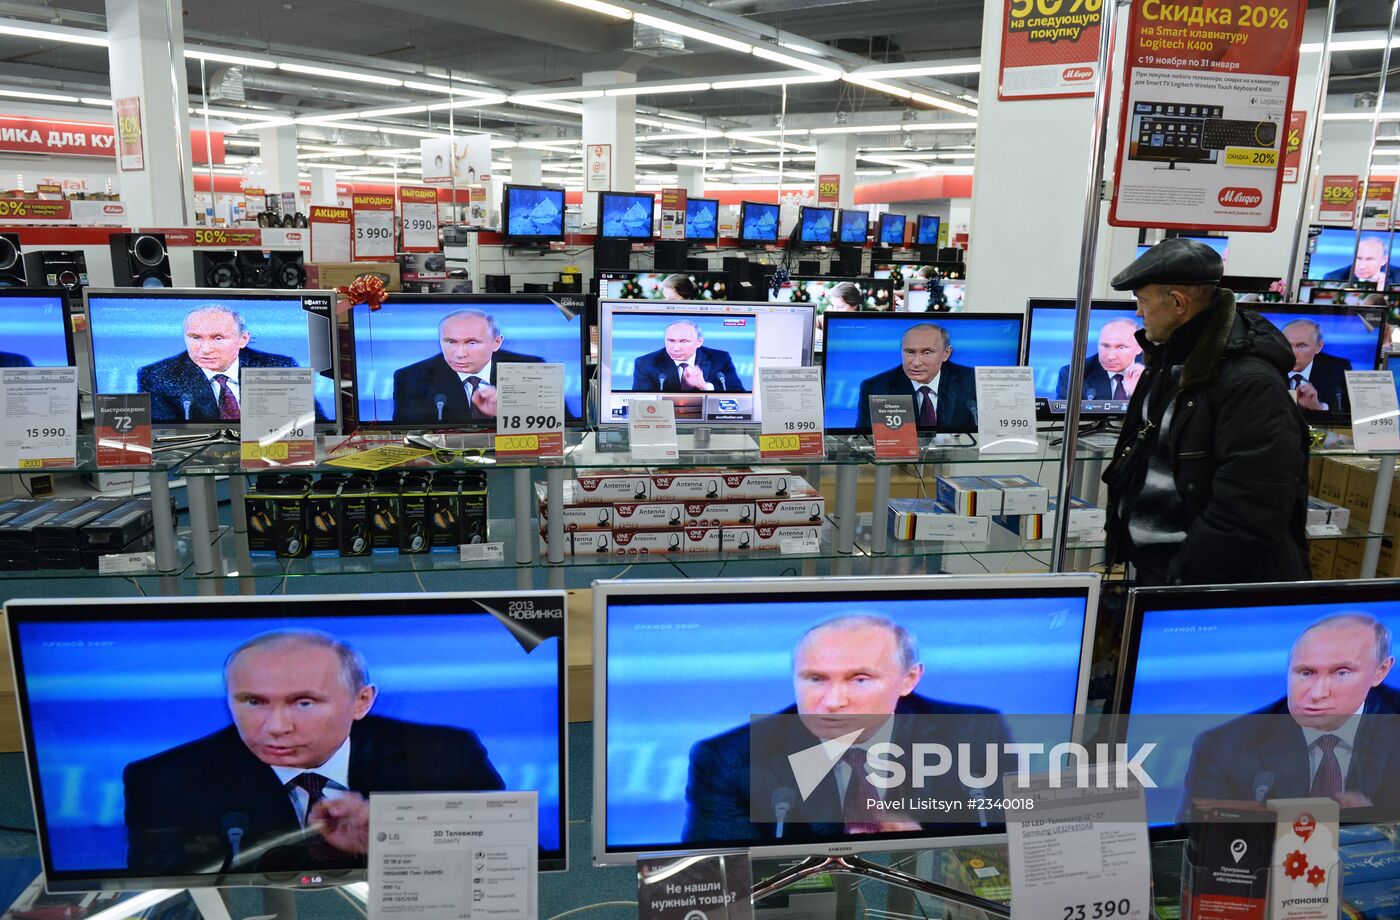 Broadcast of President Vladimir Putin's Q&A session